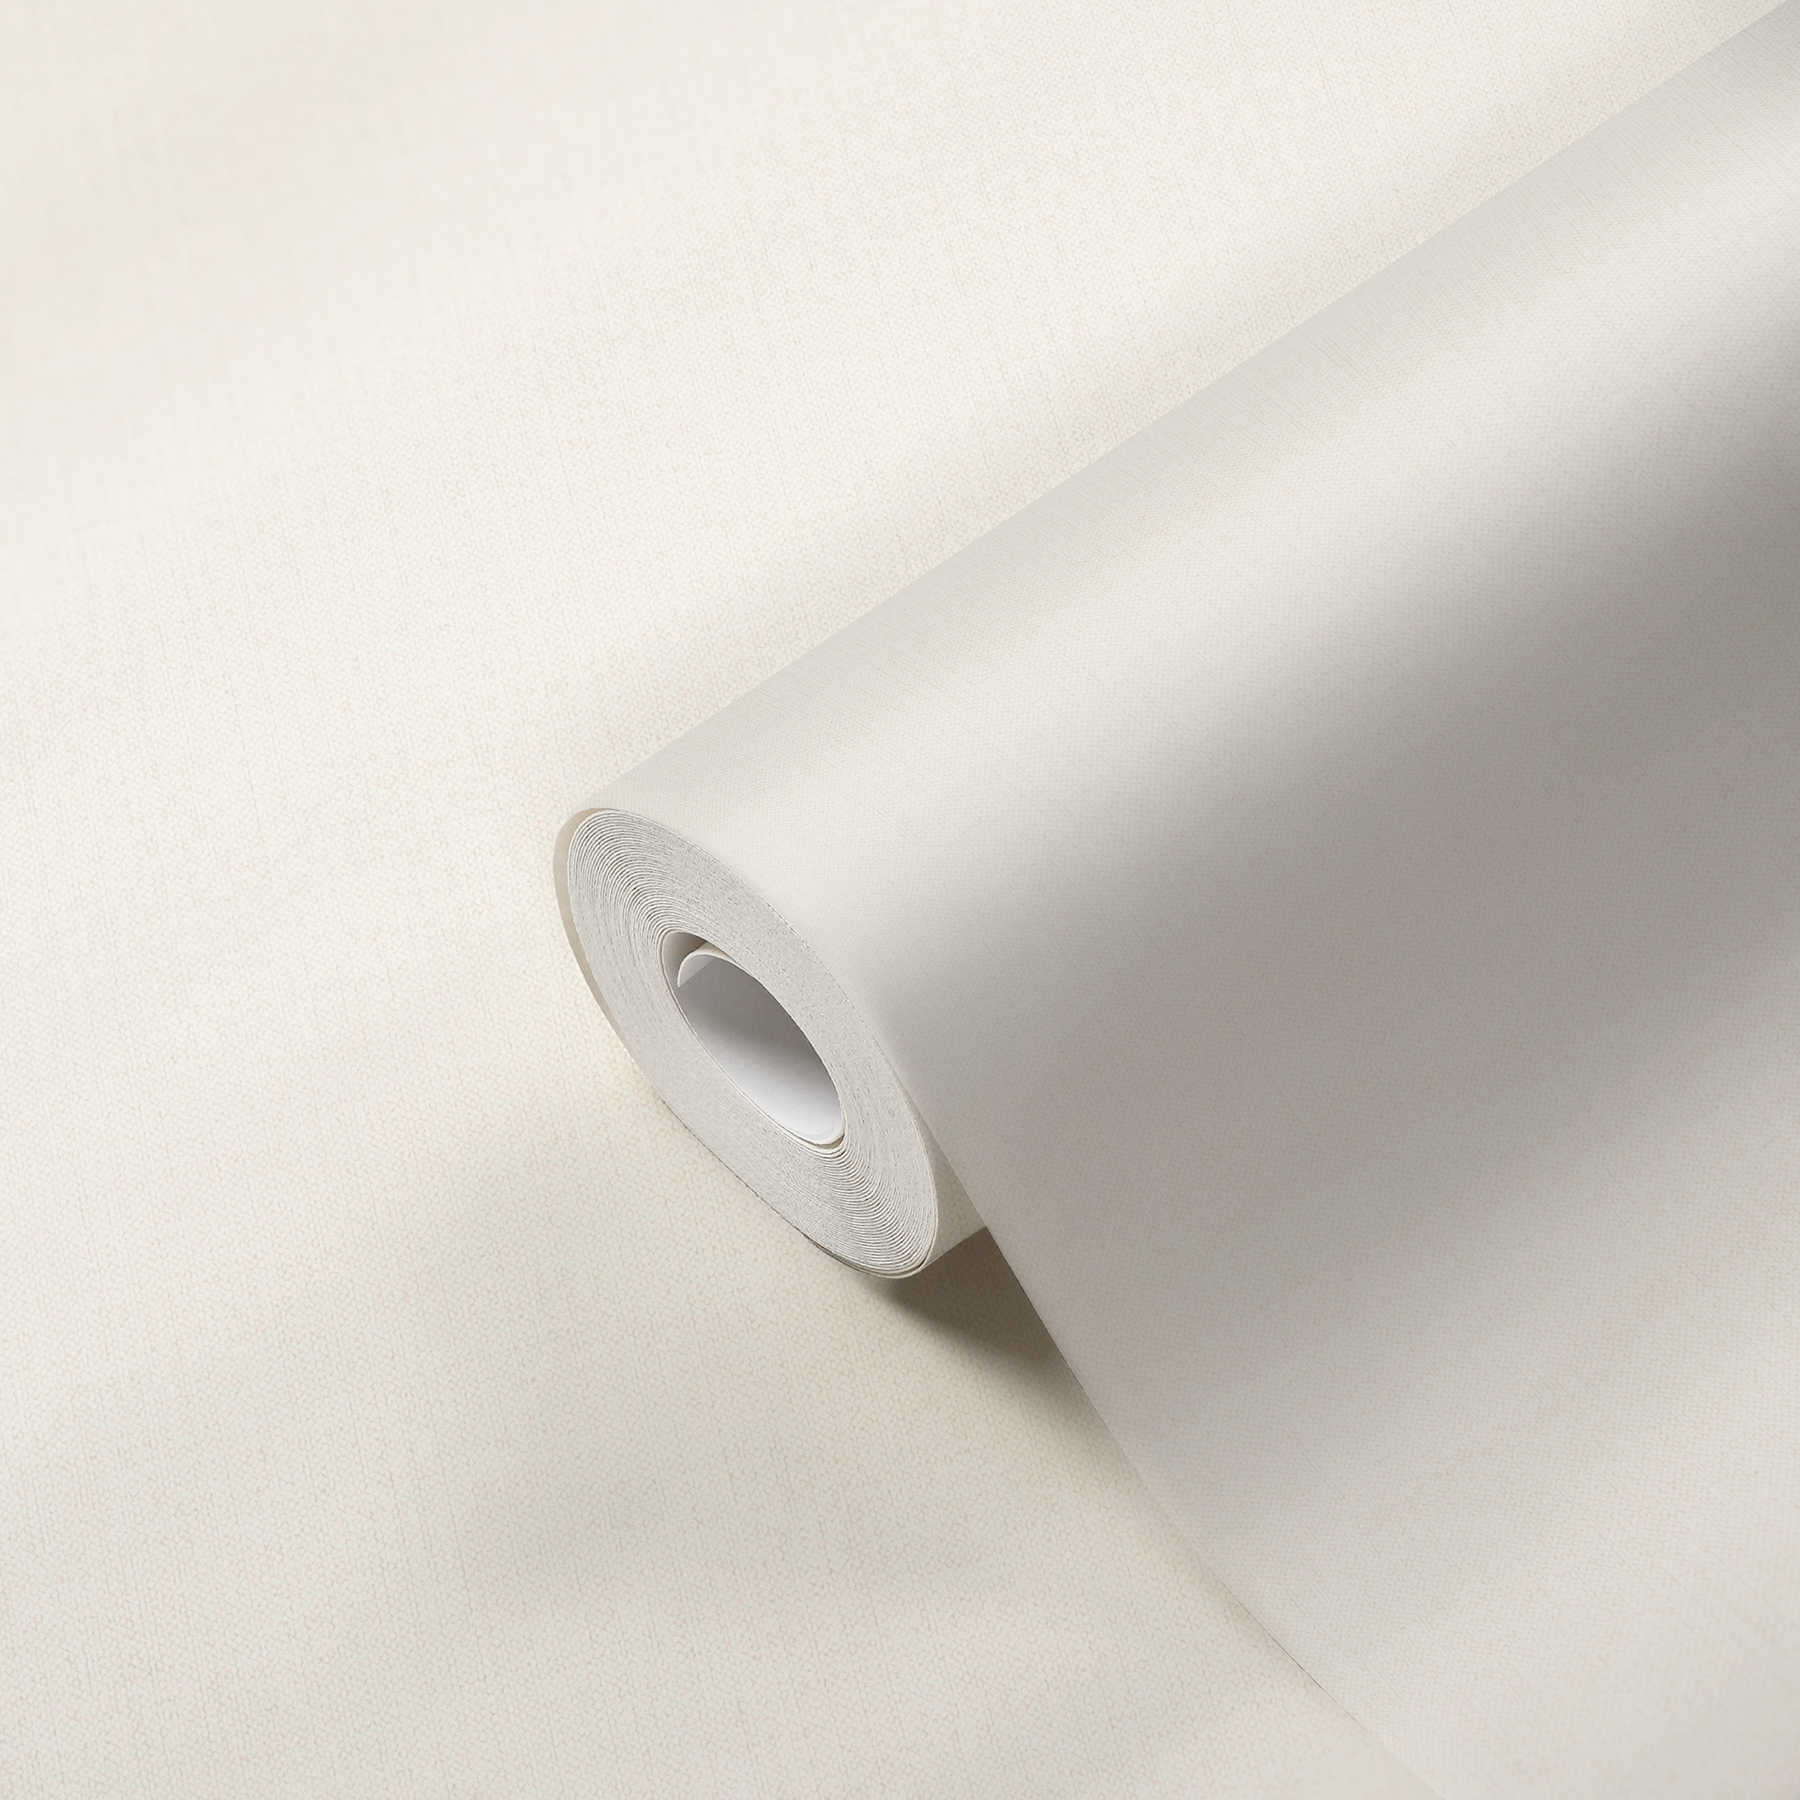             Carta da parati in tessuto non tessuto bianco opaco con texture in tessuto
        